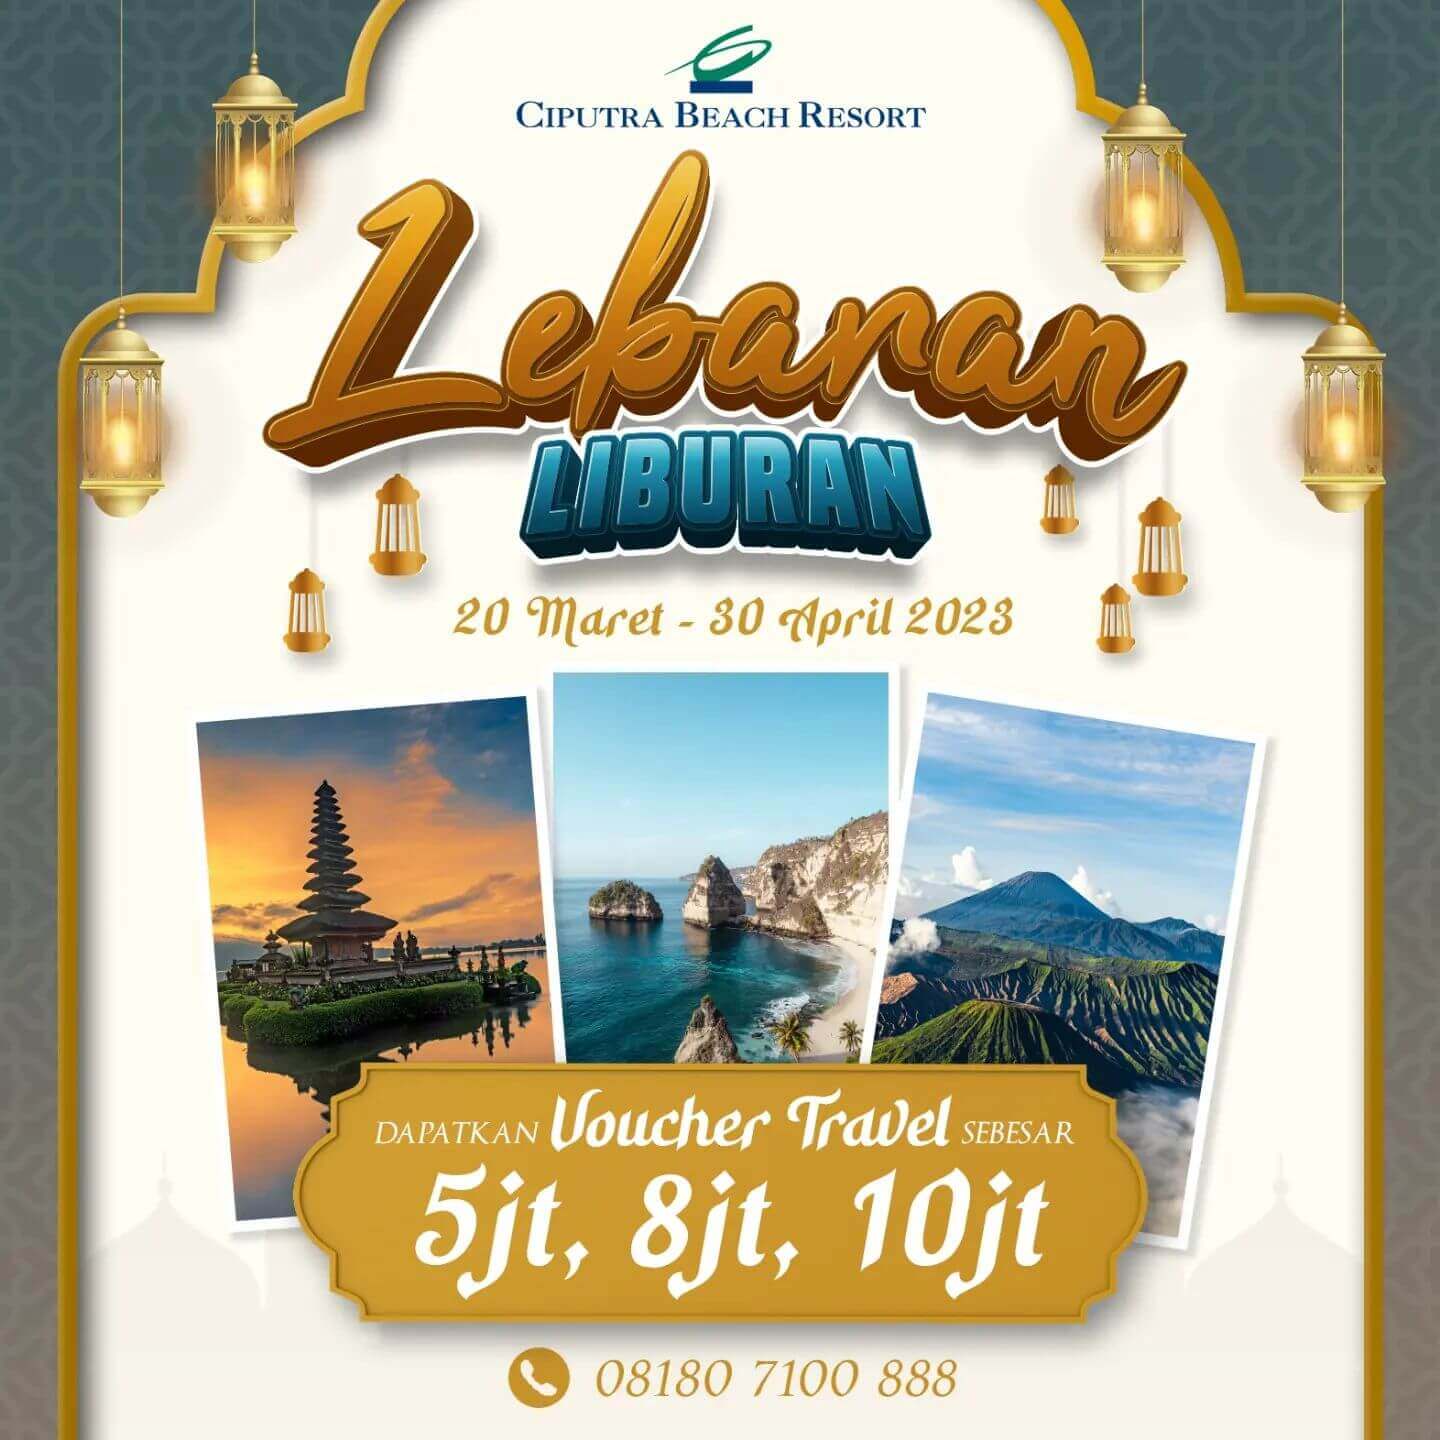 Lebaran Holidays 20 March - 30 April 2023